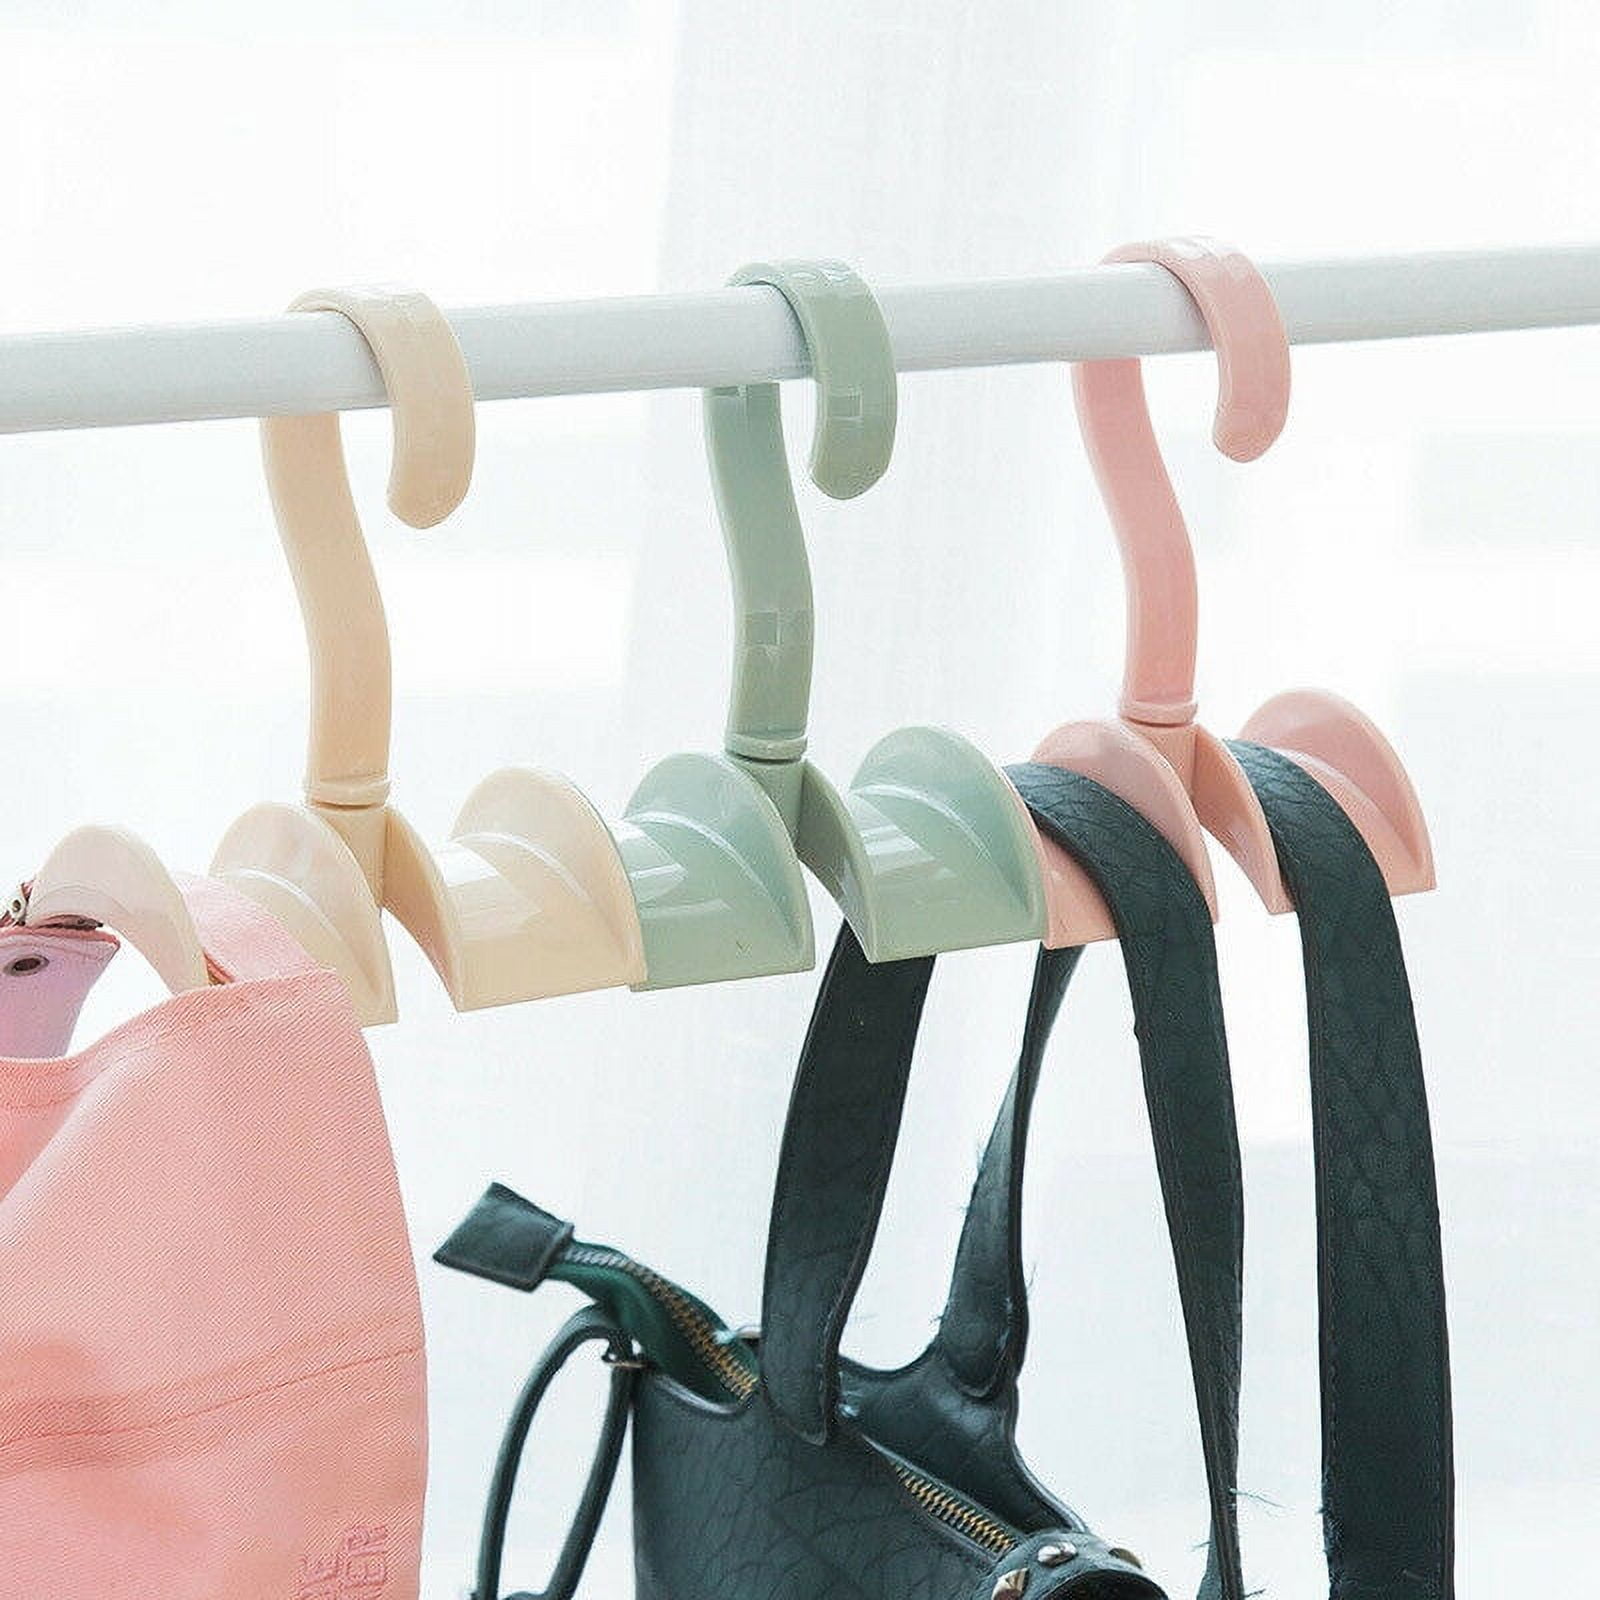 purse hanger for closet